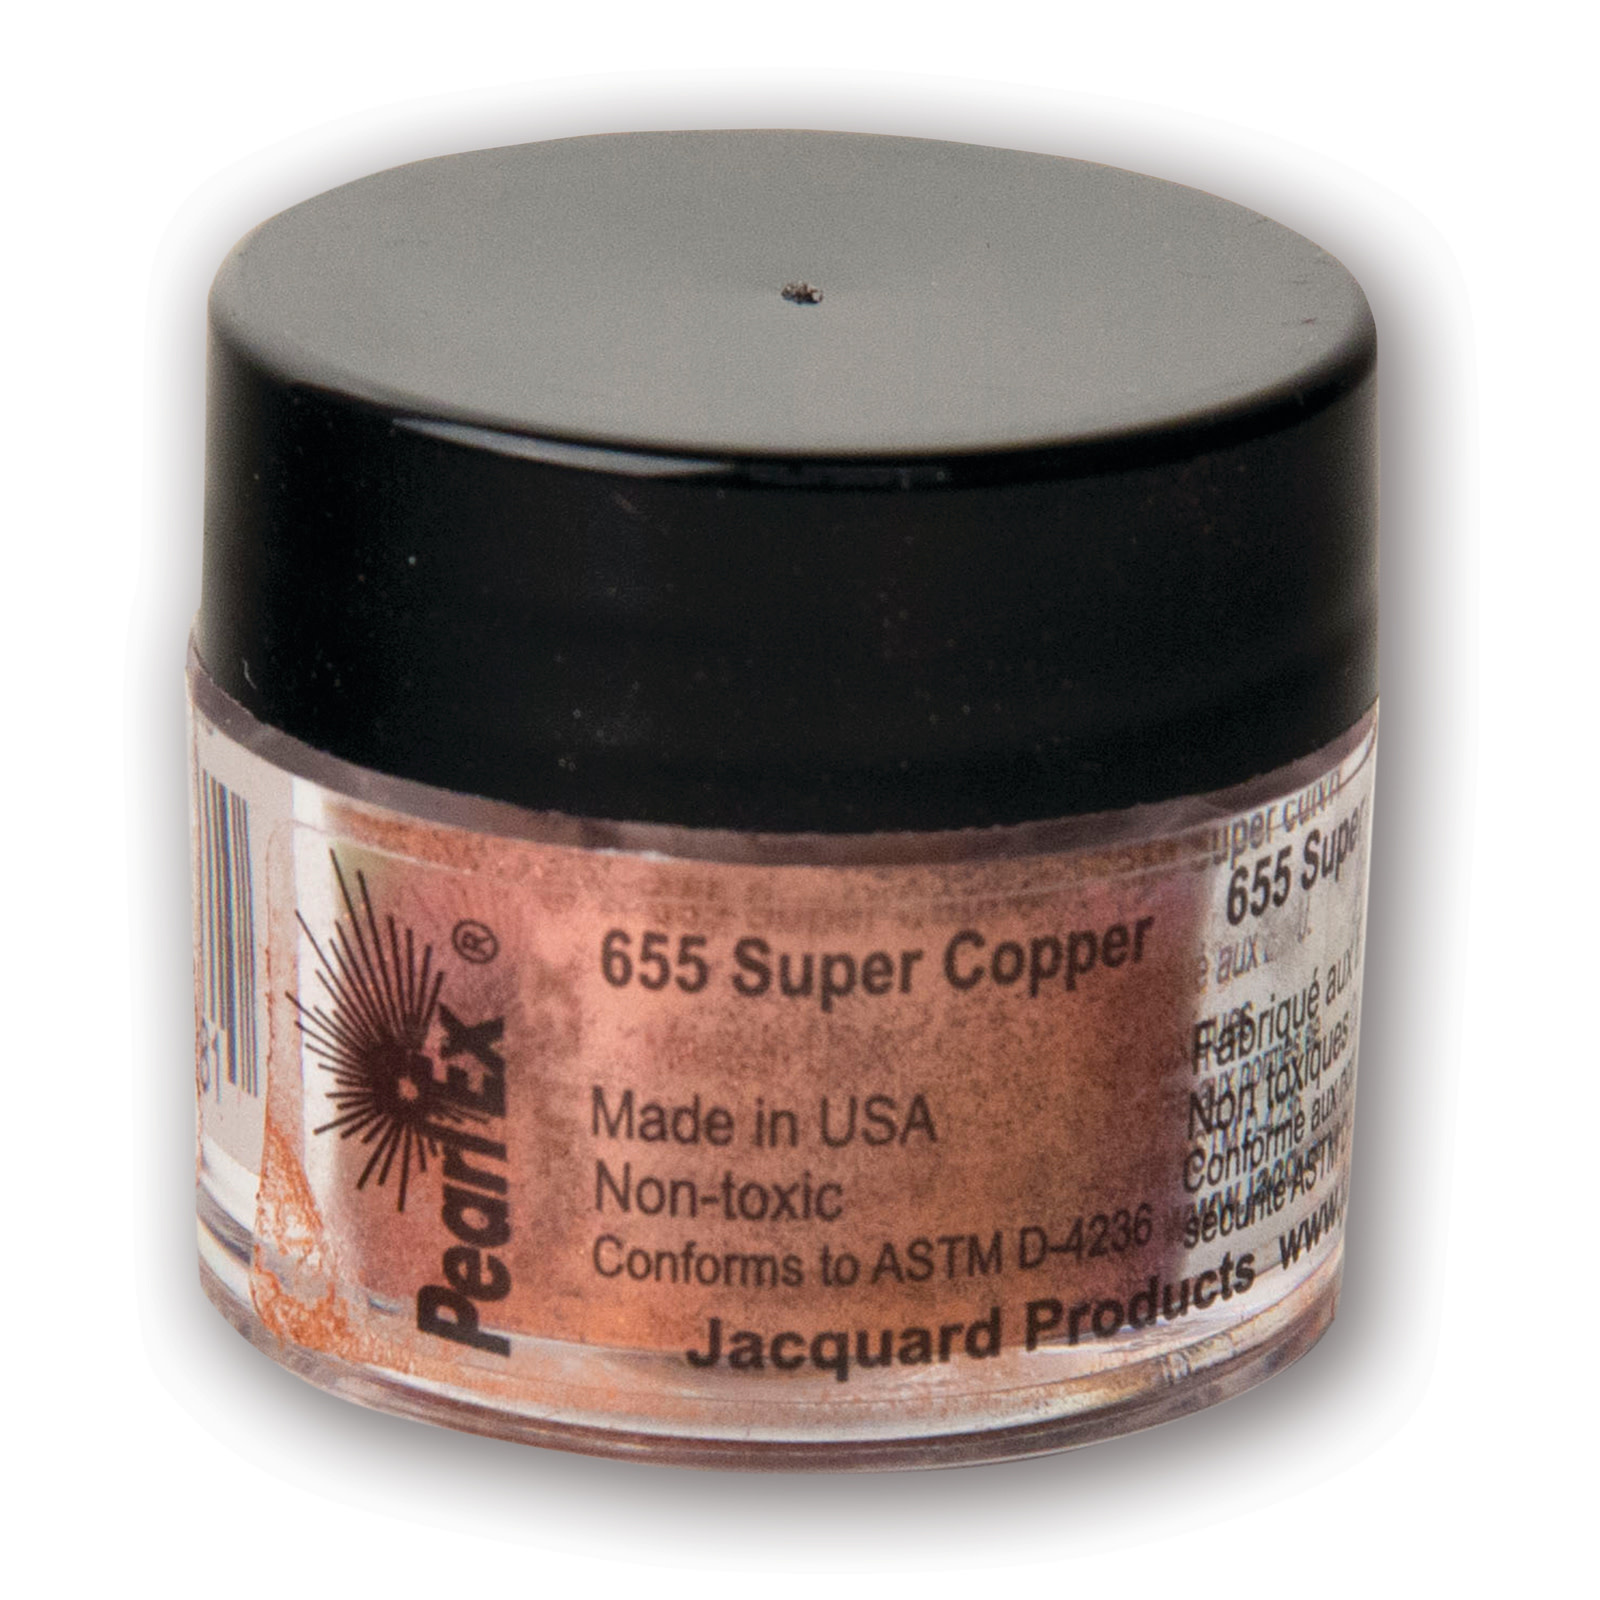 Jacquard Pearl Ex Powdered Pigment, 3g Jar, Super Copper